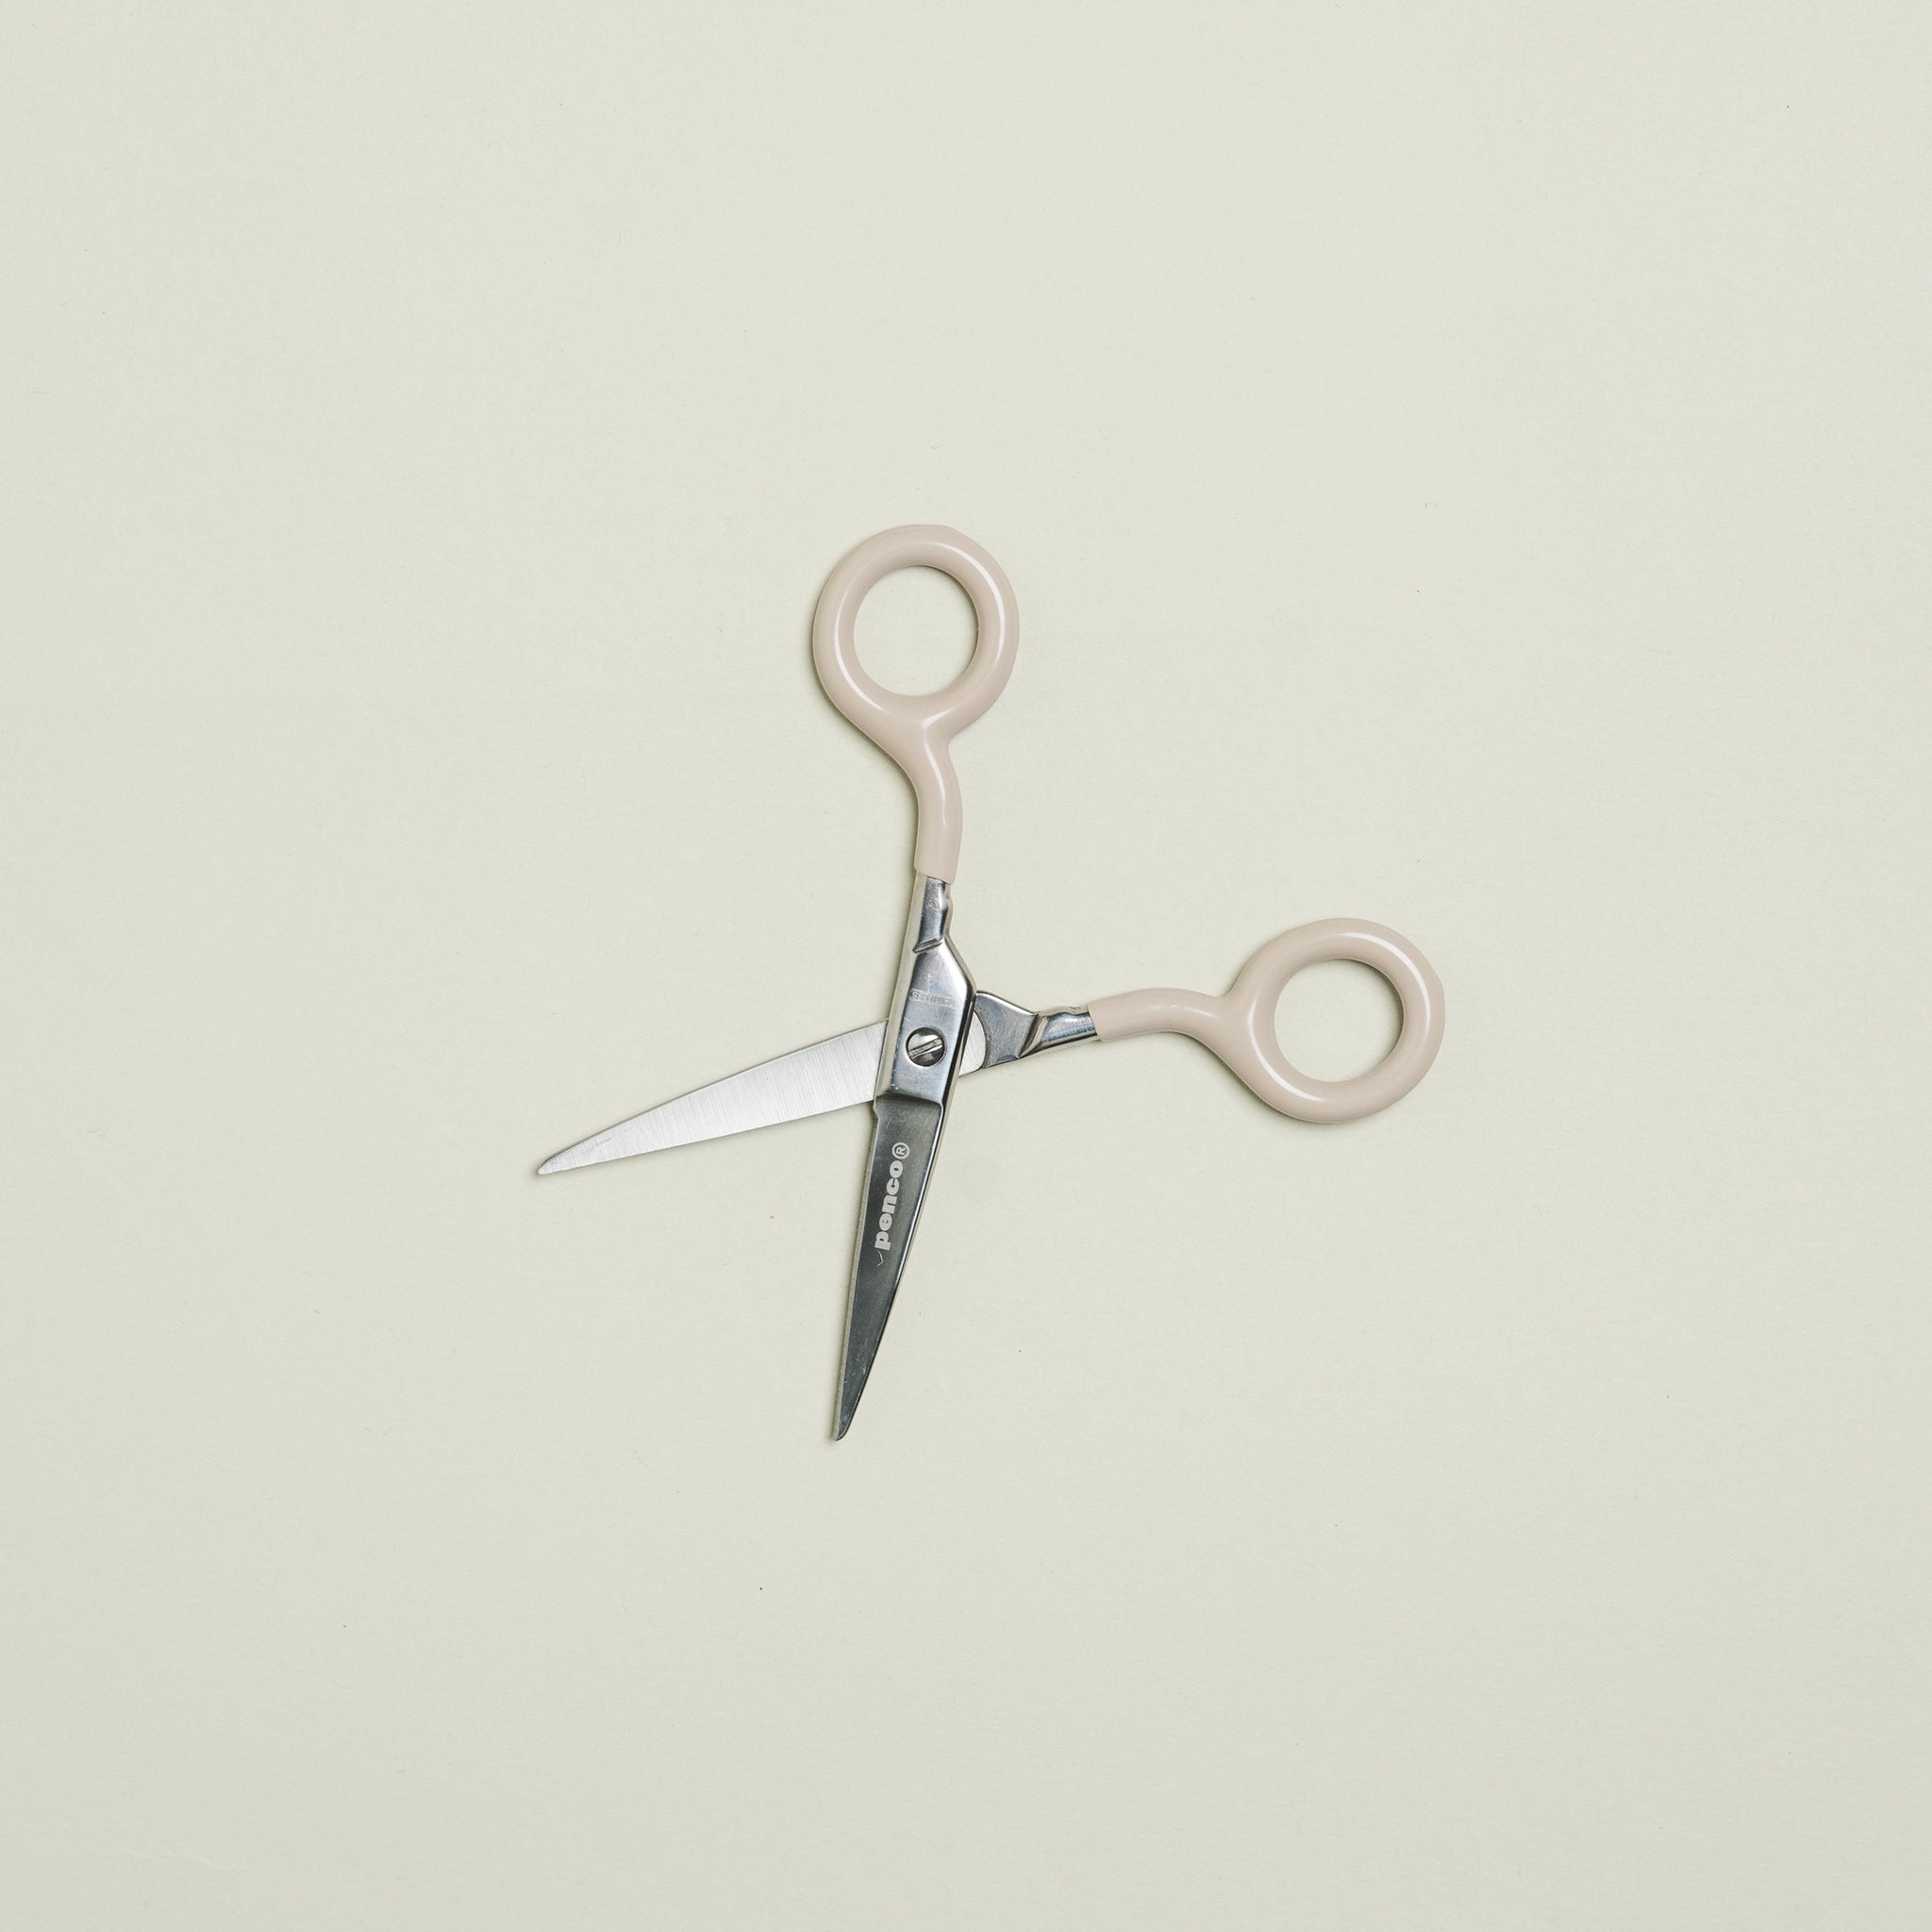 Penco Rubber Handle Scissors